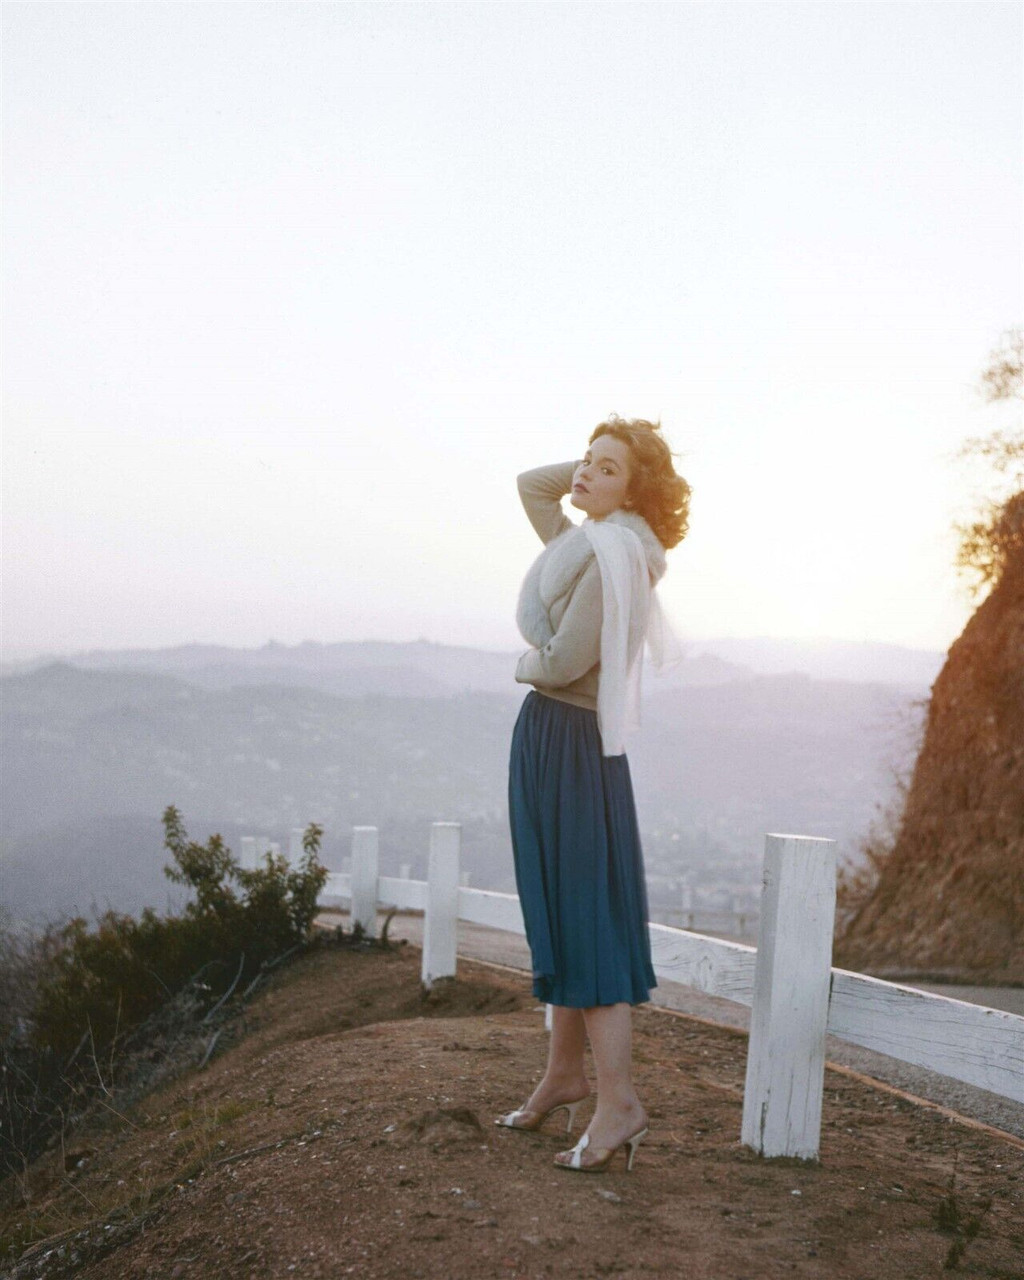 Woman on a Fashion Photoshoot Posing in Mountains · Free Stock Photo